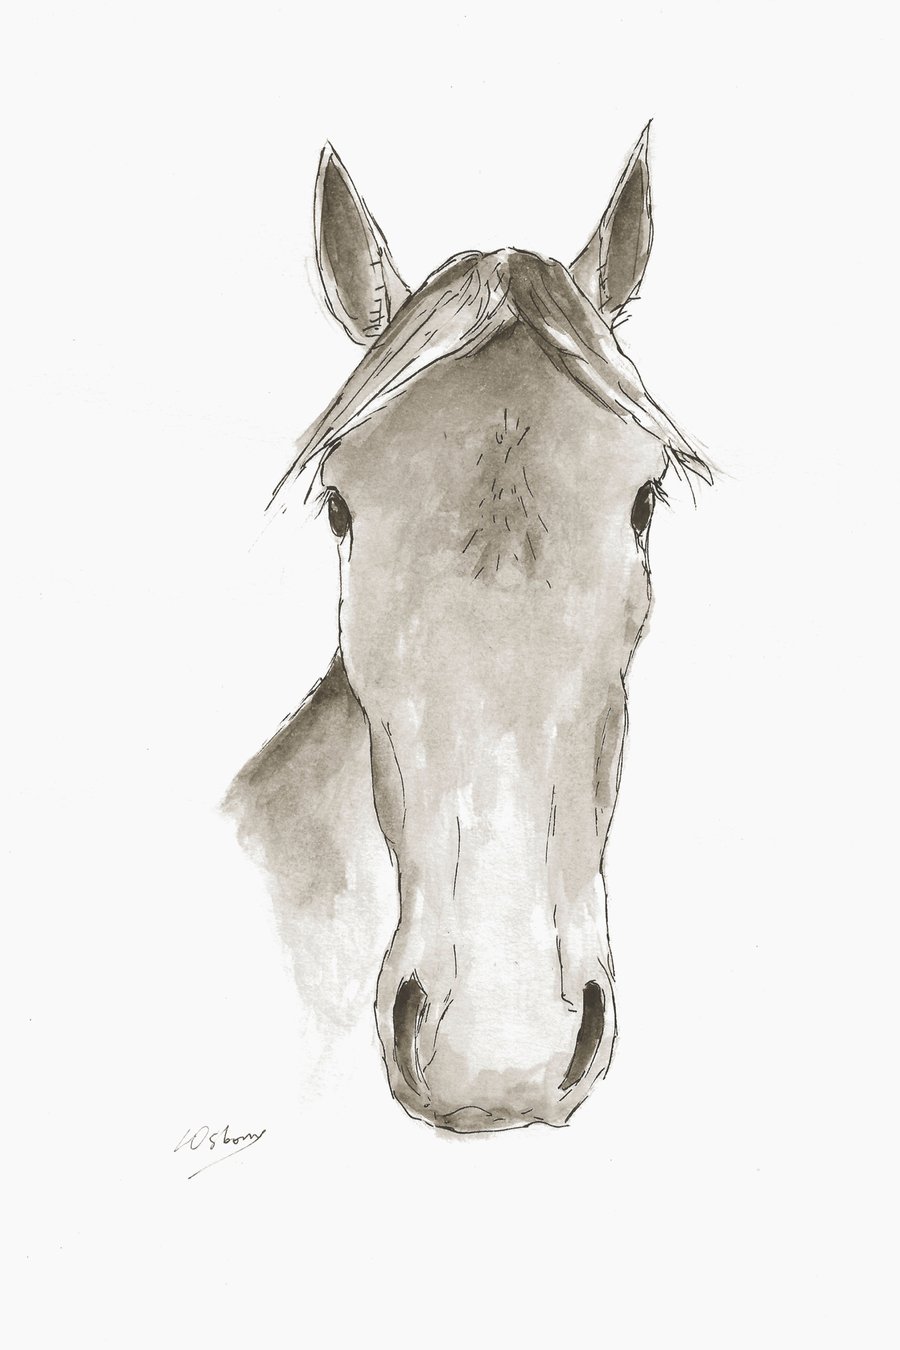 Faithful friend - signed print of horse illustration